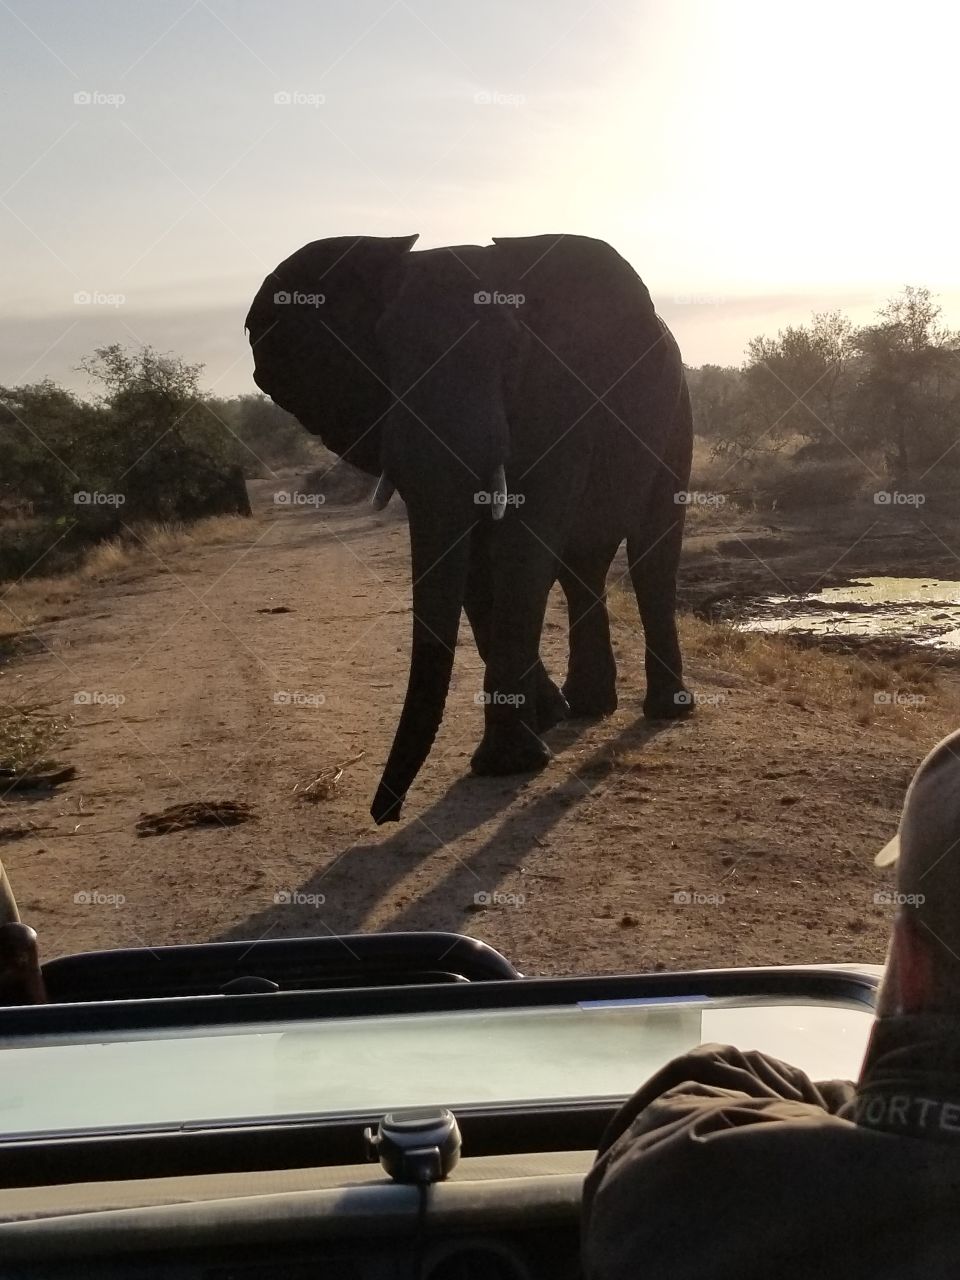 Elephant encounter